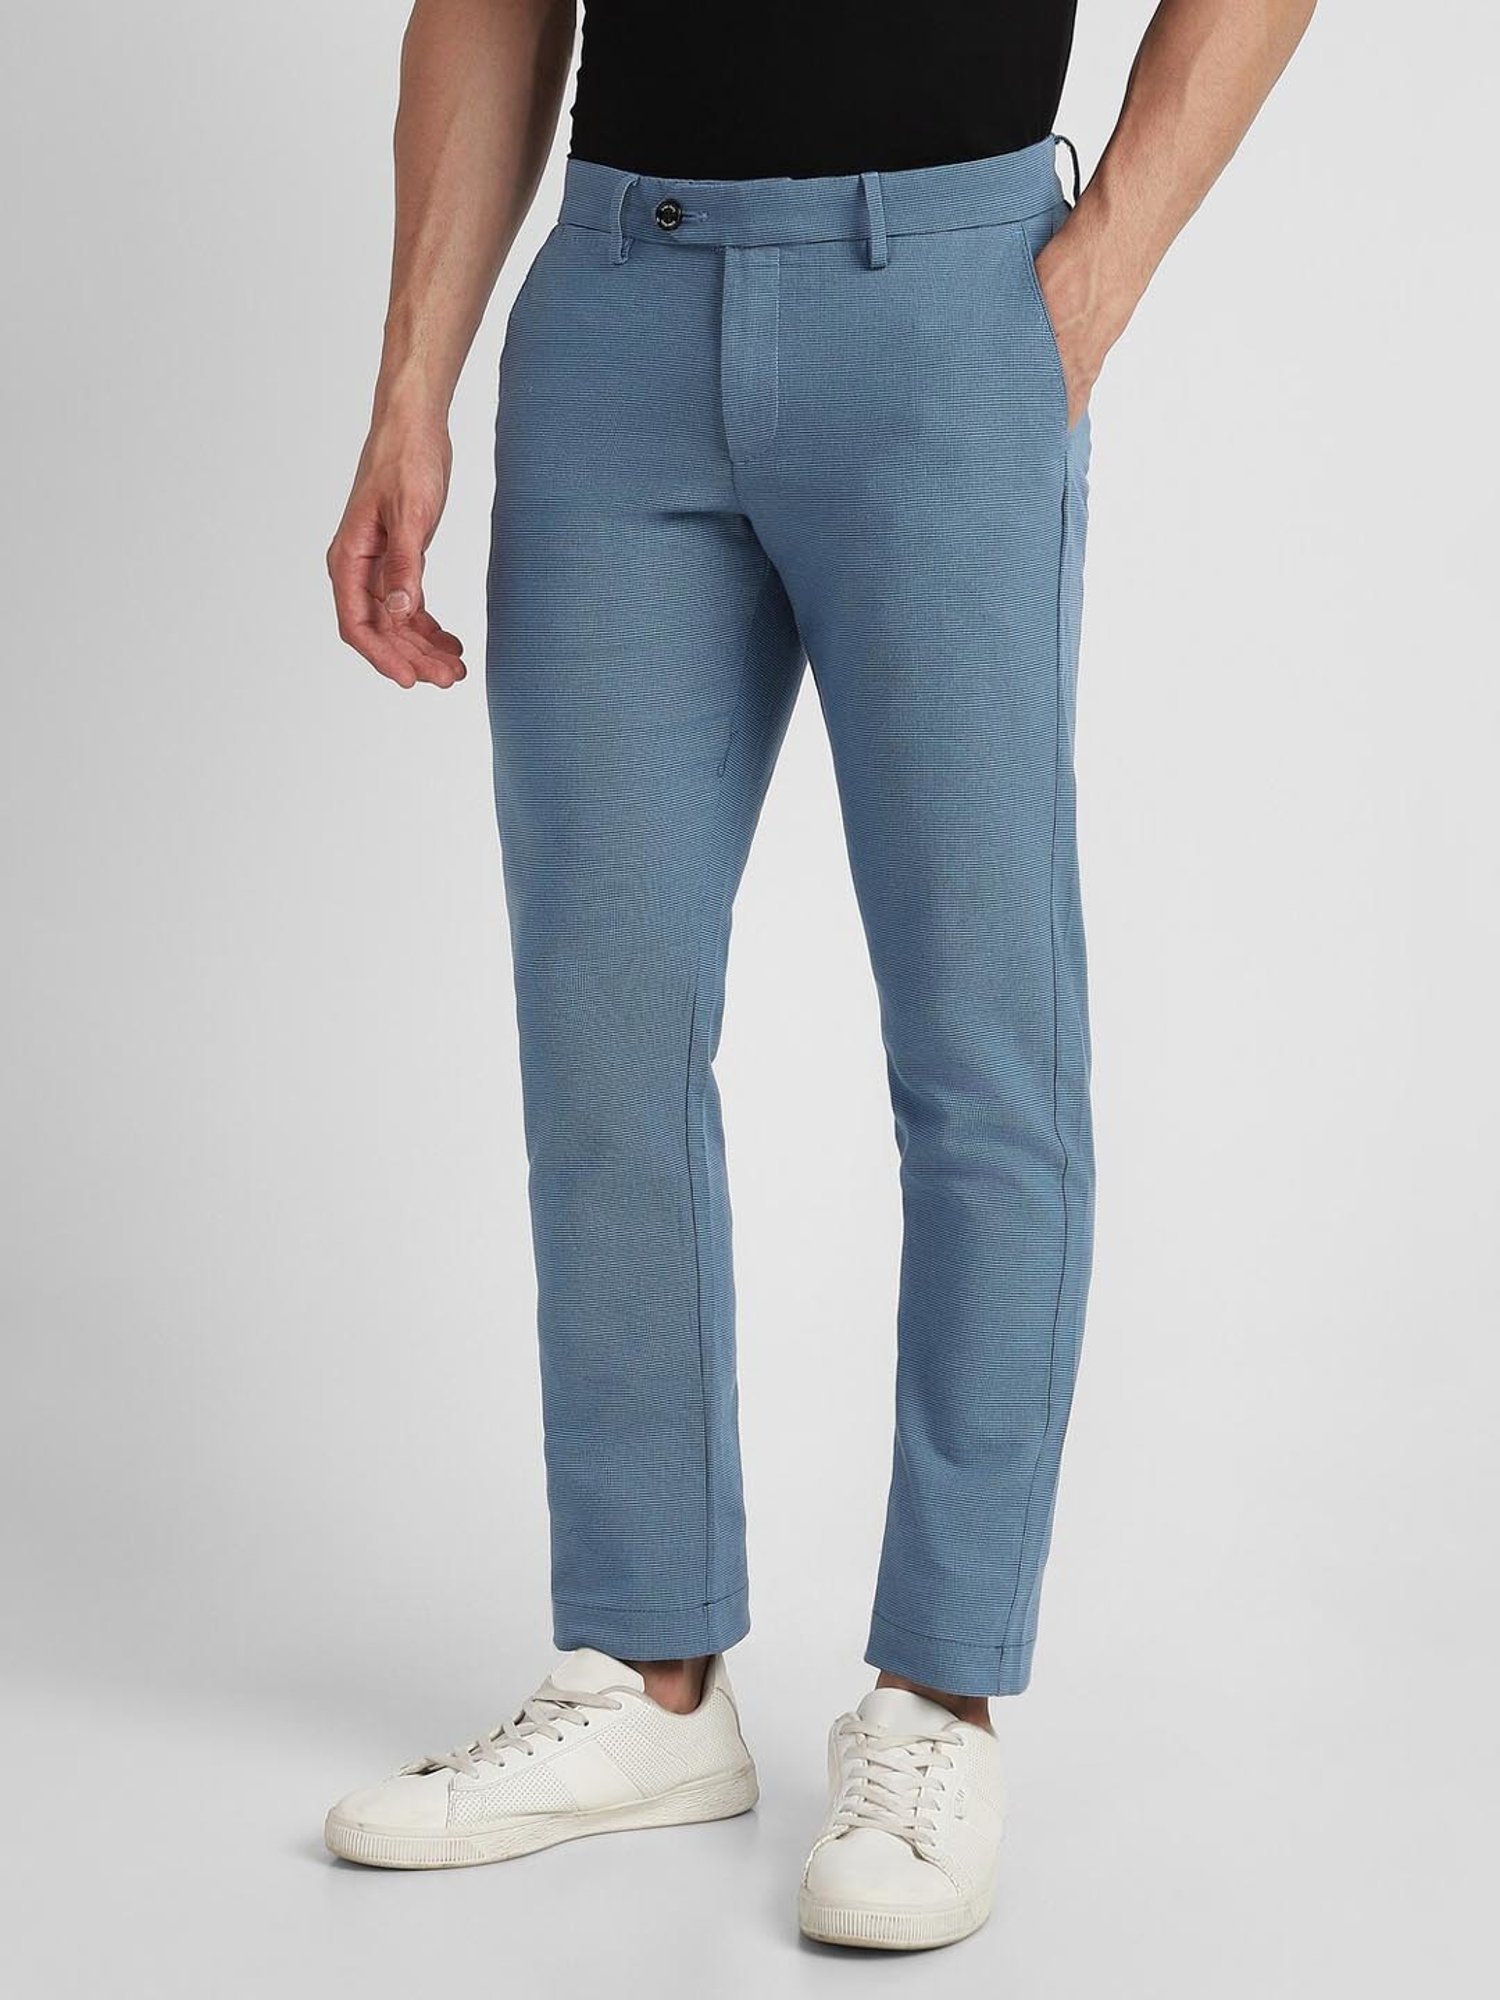 11 Best Light blue & Grey pants outfits ideas | grey pants outfit, mens  fashion, grey pants